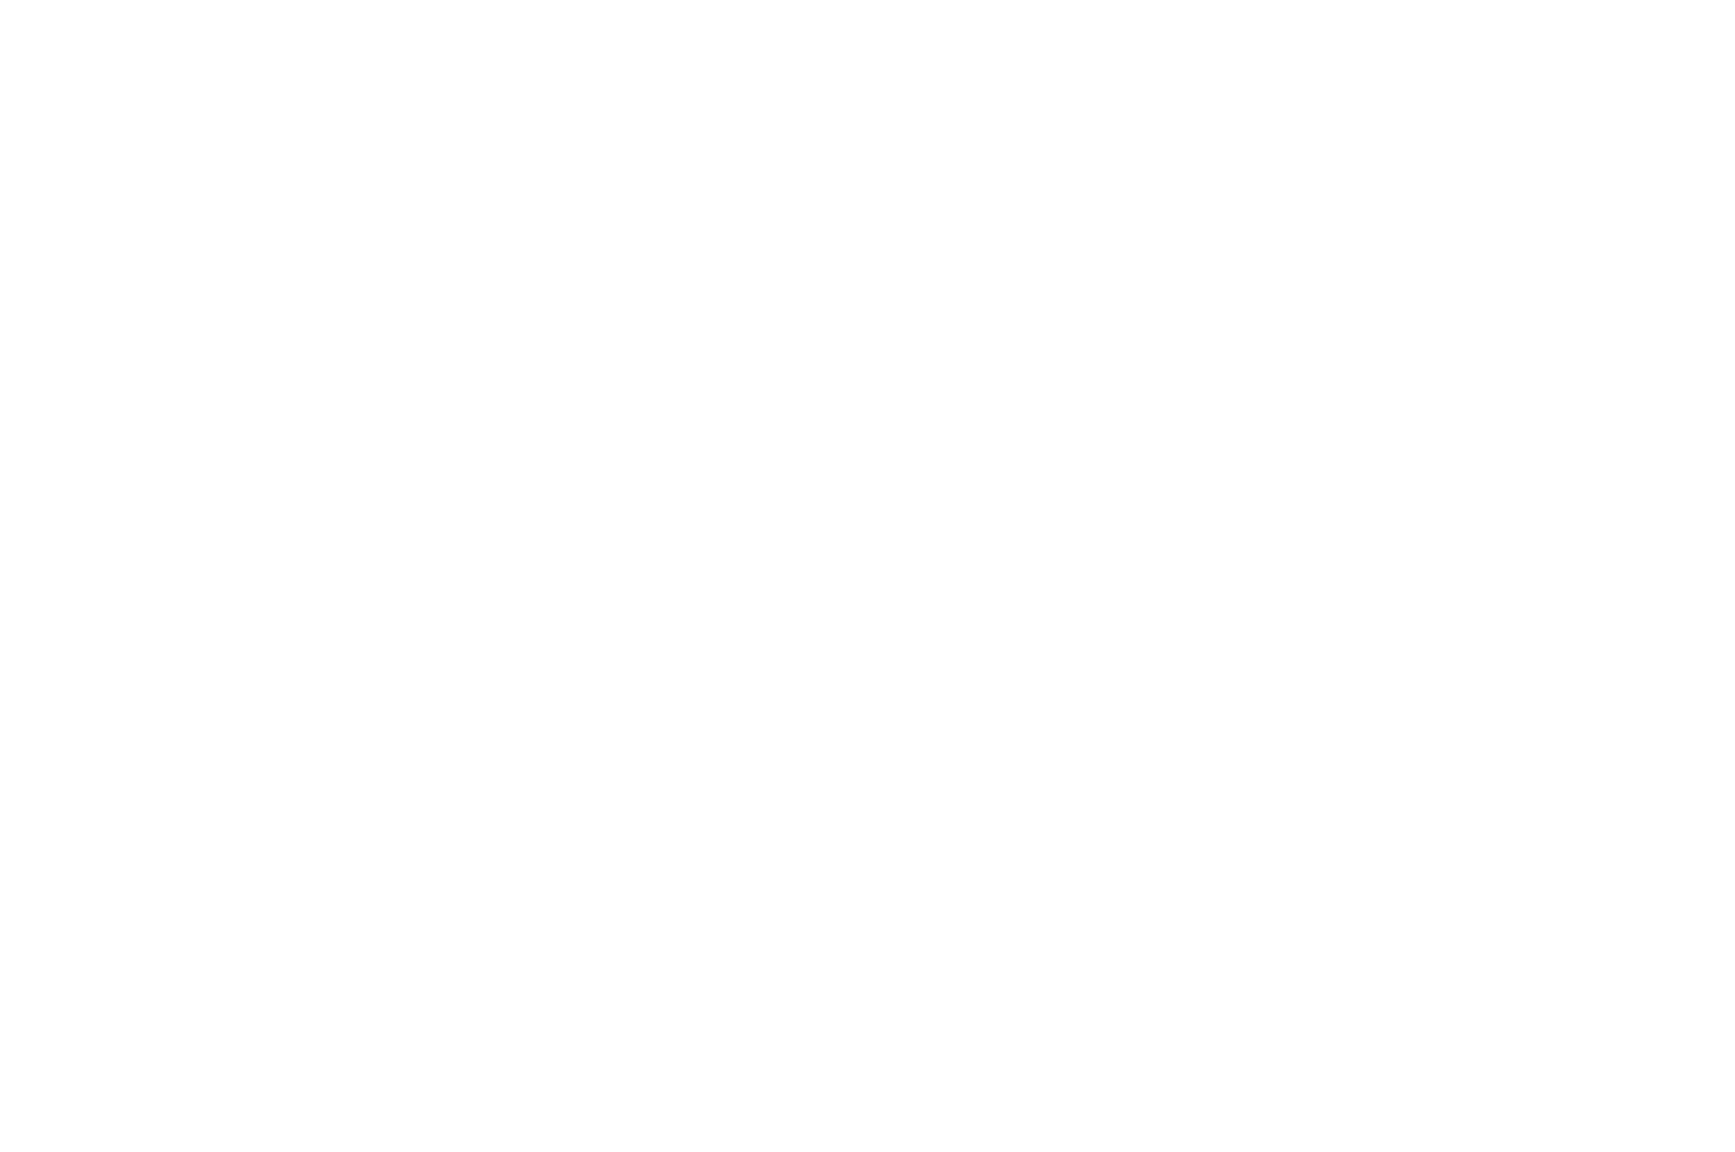 SPECIAL JURY AWARD - PORTUGAL INTERNATIONAL FILM FESTIVAL - 2021